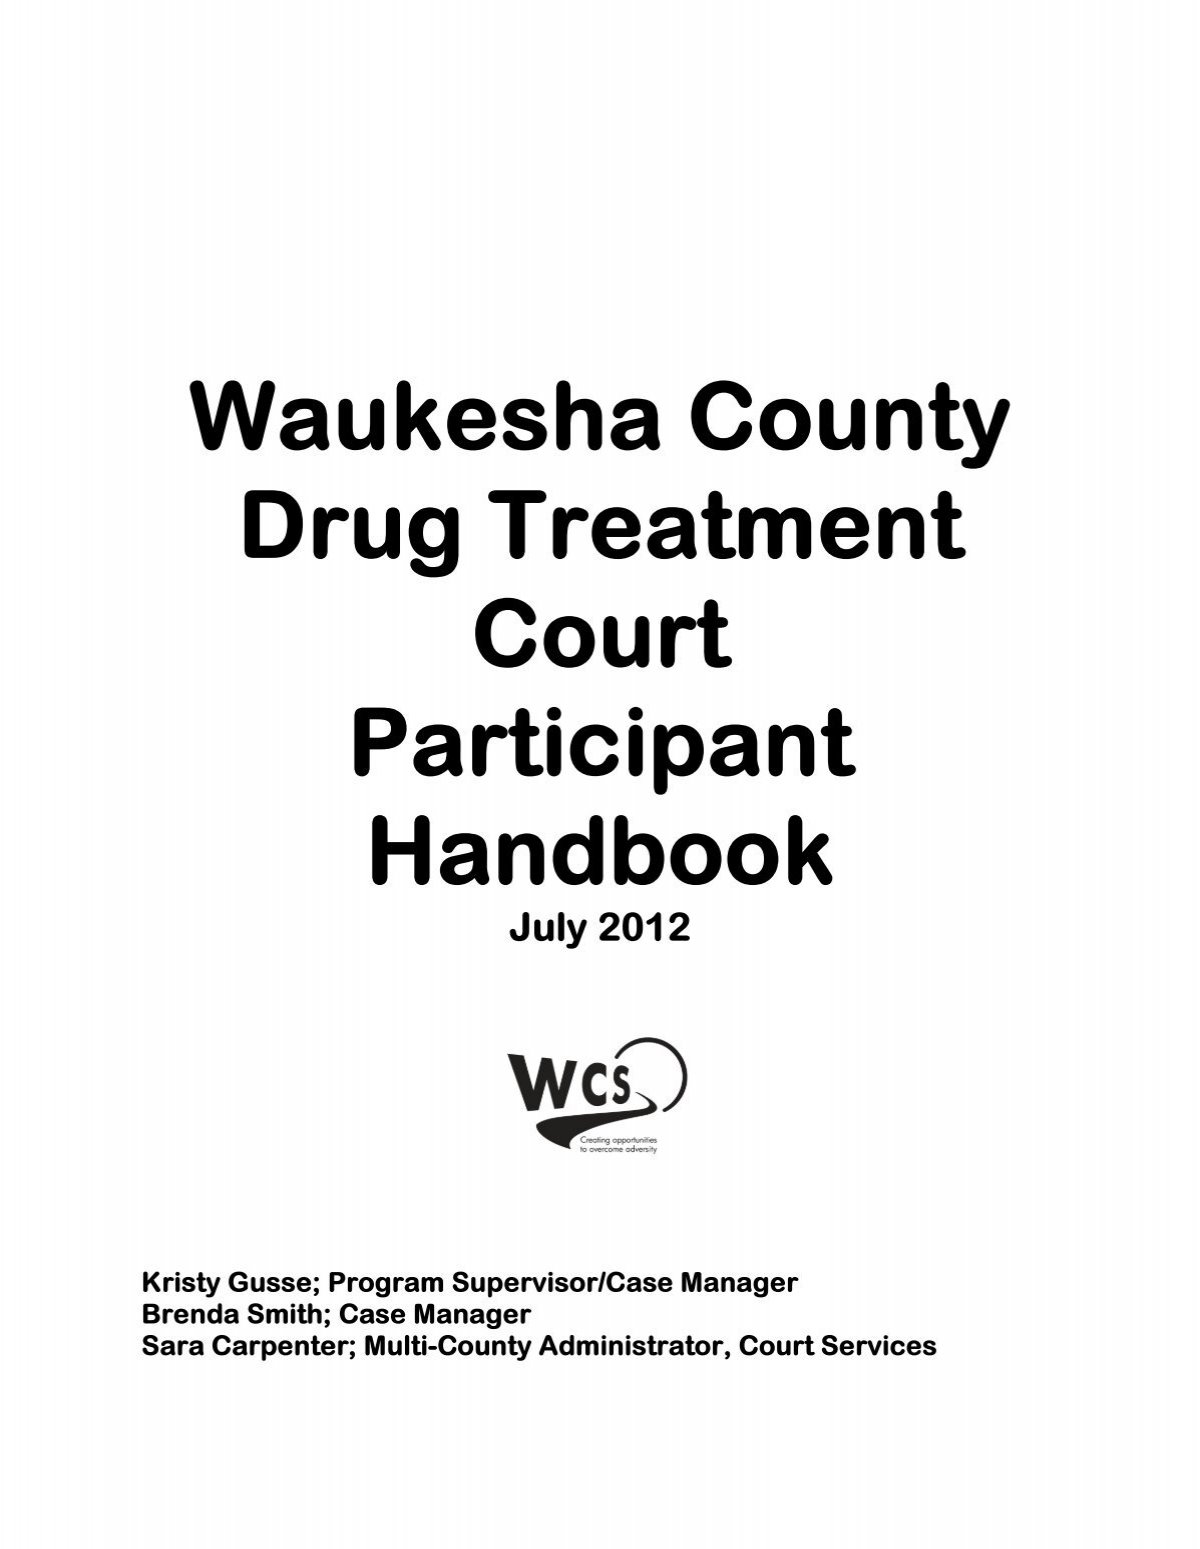 Waukesha County Drug Treatment Court Participant Handbook